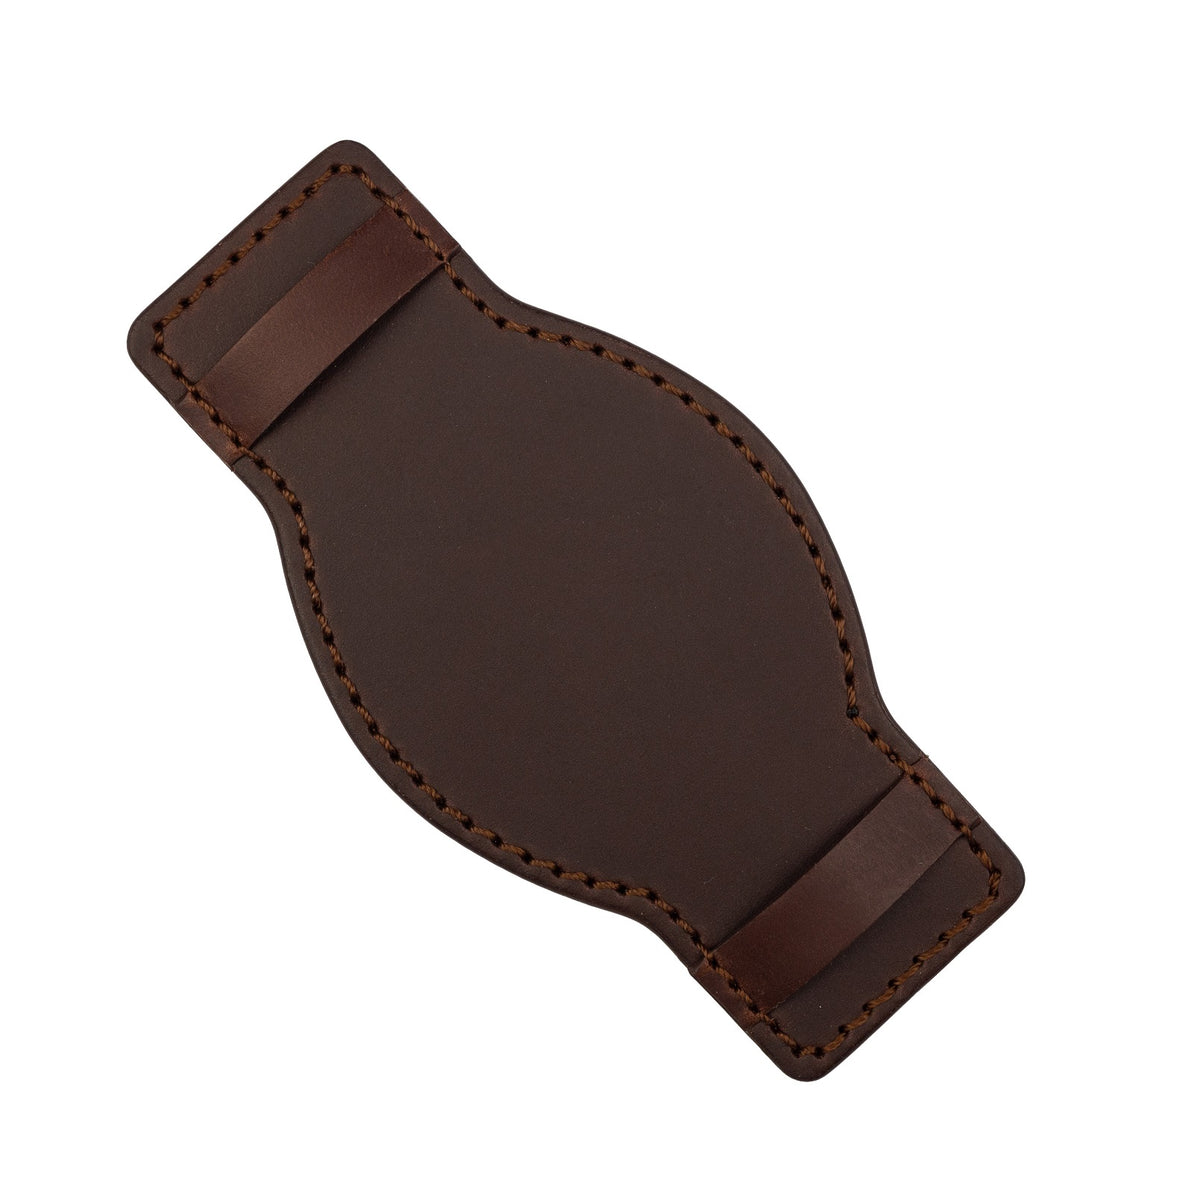 N2W Horween Leather Bund Pad in Brown - Nomad Watch Works SG